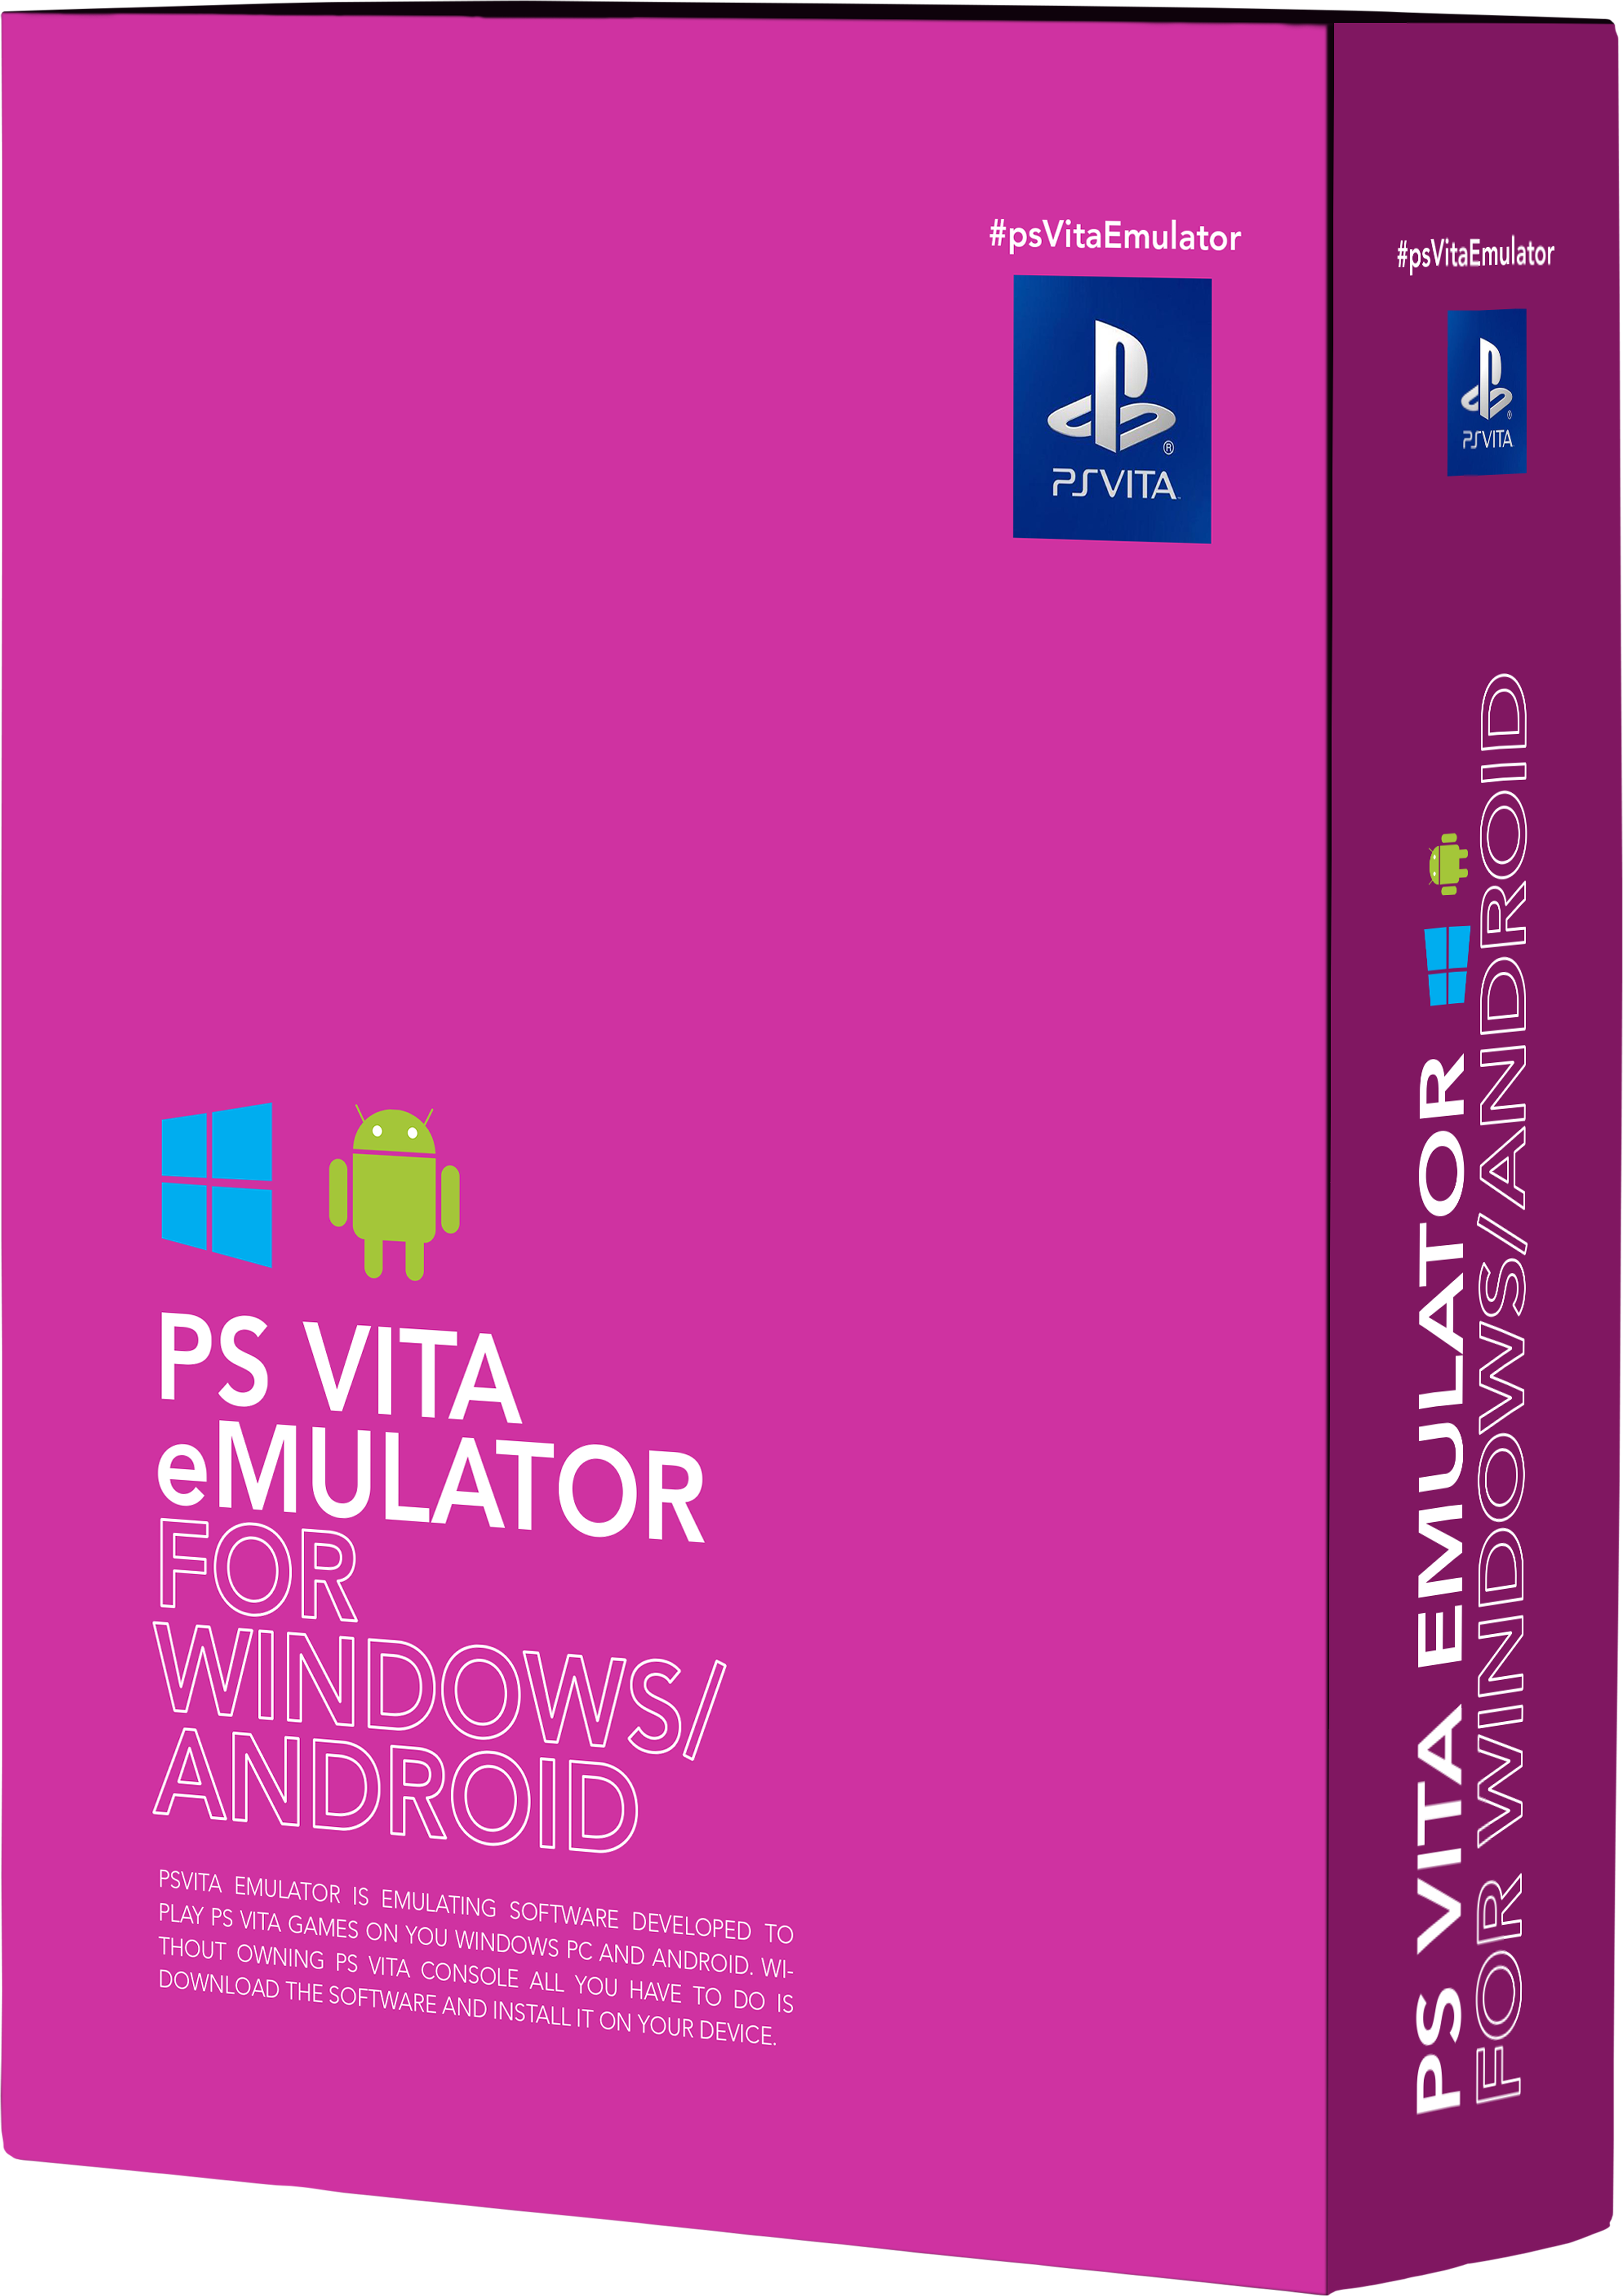 ps vita emulator android reddit